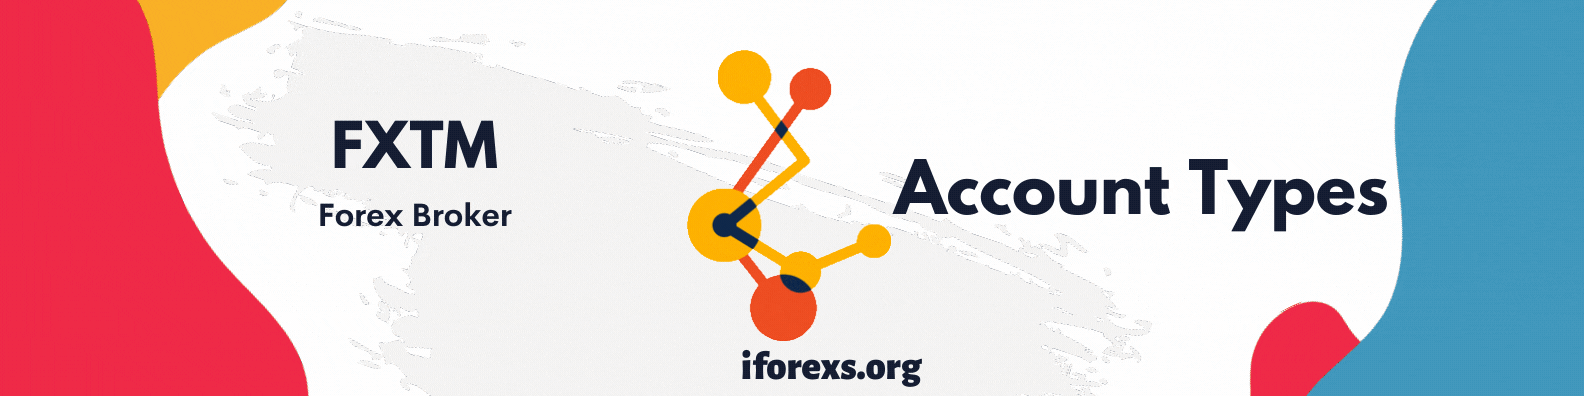 FXTM Account Types